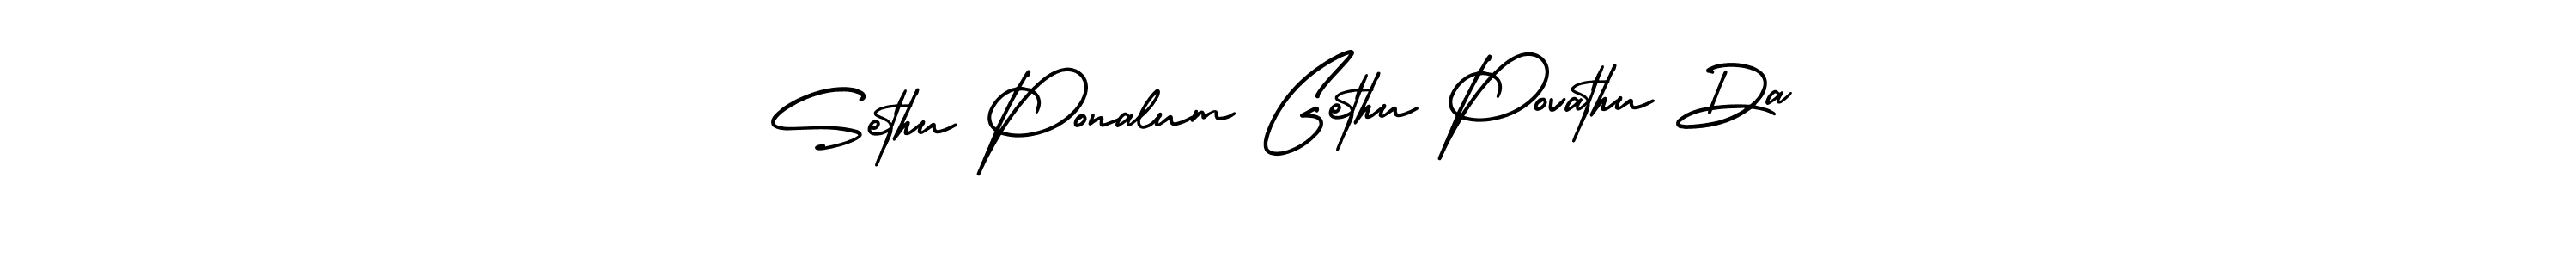 How to Draw Sethu Ponalum Gethu Povathu Da signature style? AmerikaSignatureDemo-Regular is a latest design signature styles for name Sethu Ponalum Gethu Povathu Da. Sethu Ponalum Gethu Povathu Da signature style 3 images and pictures png